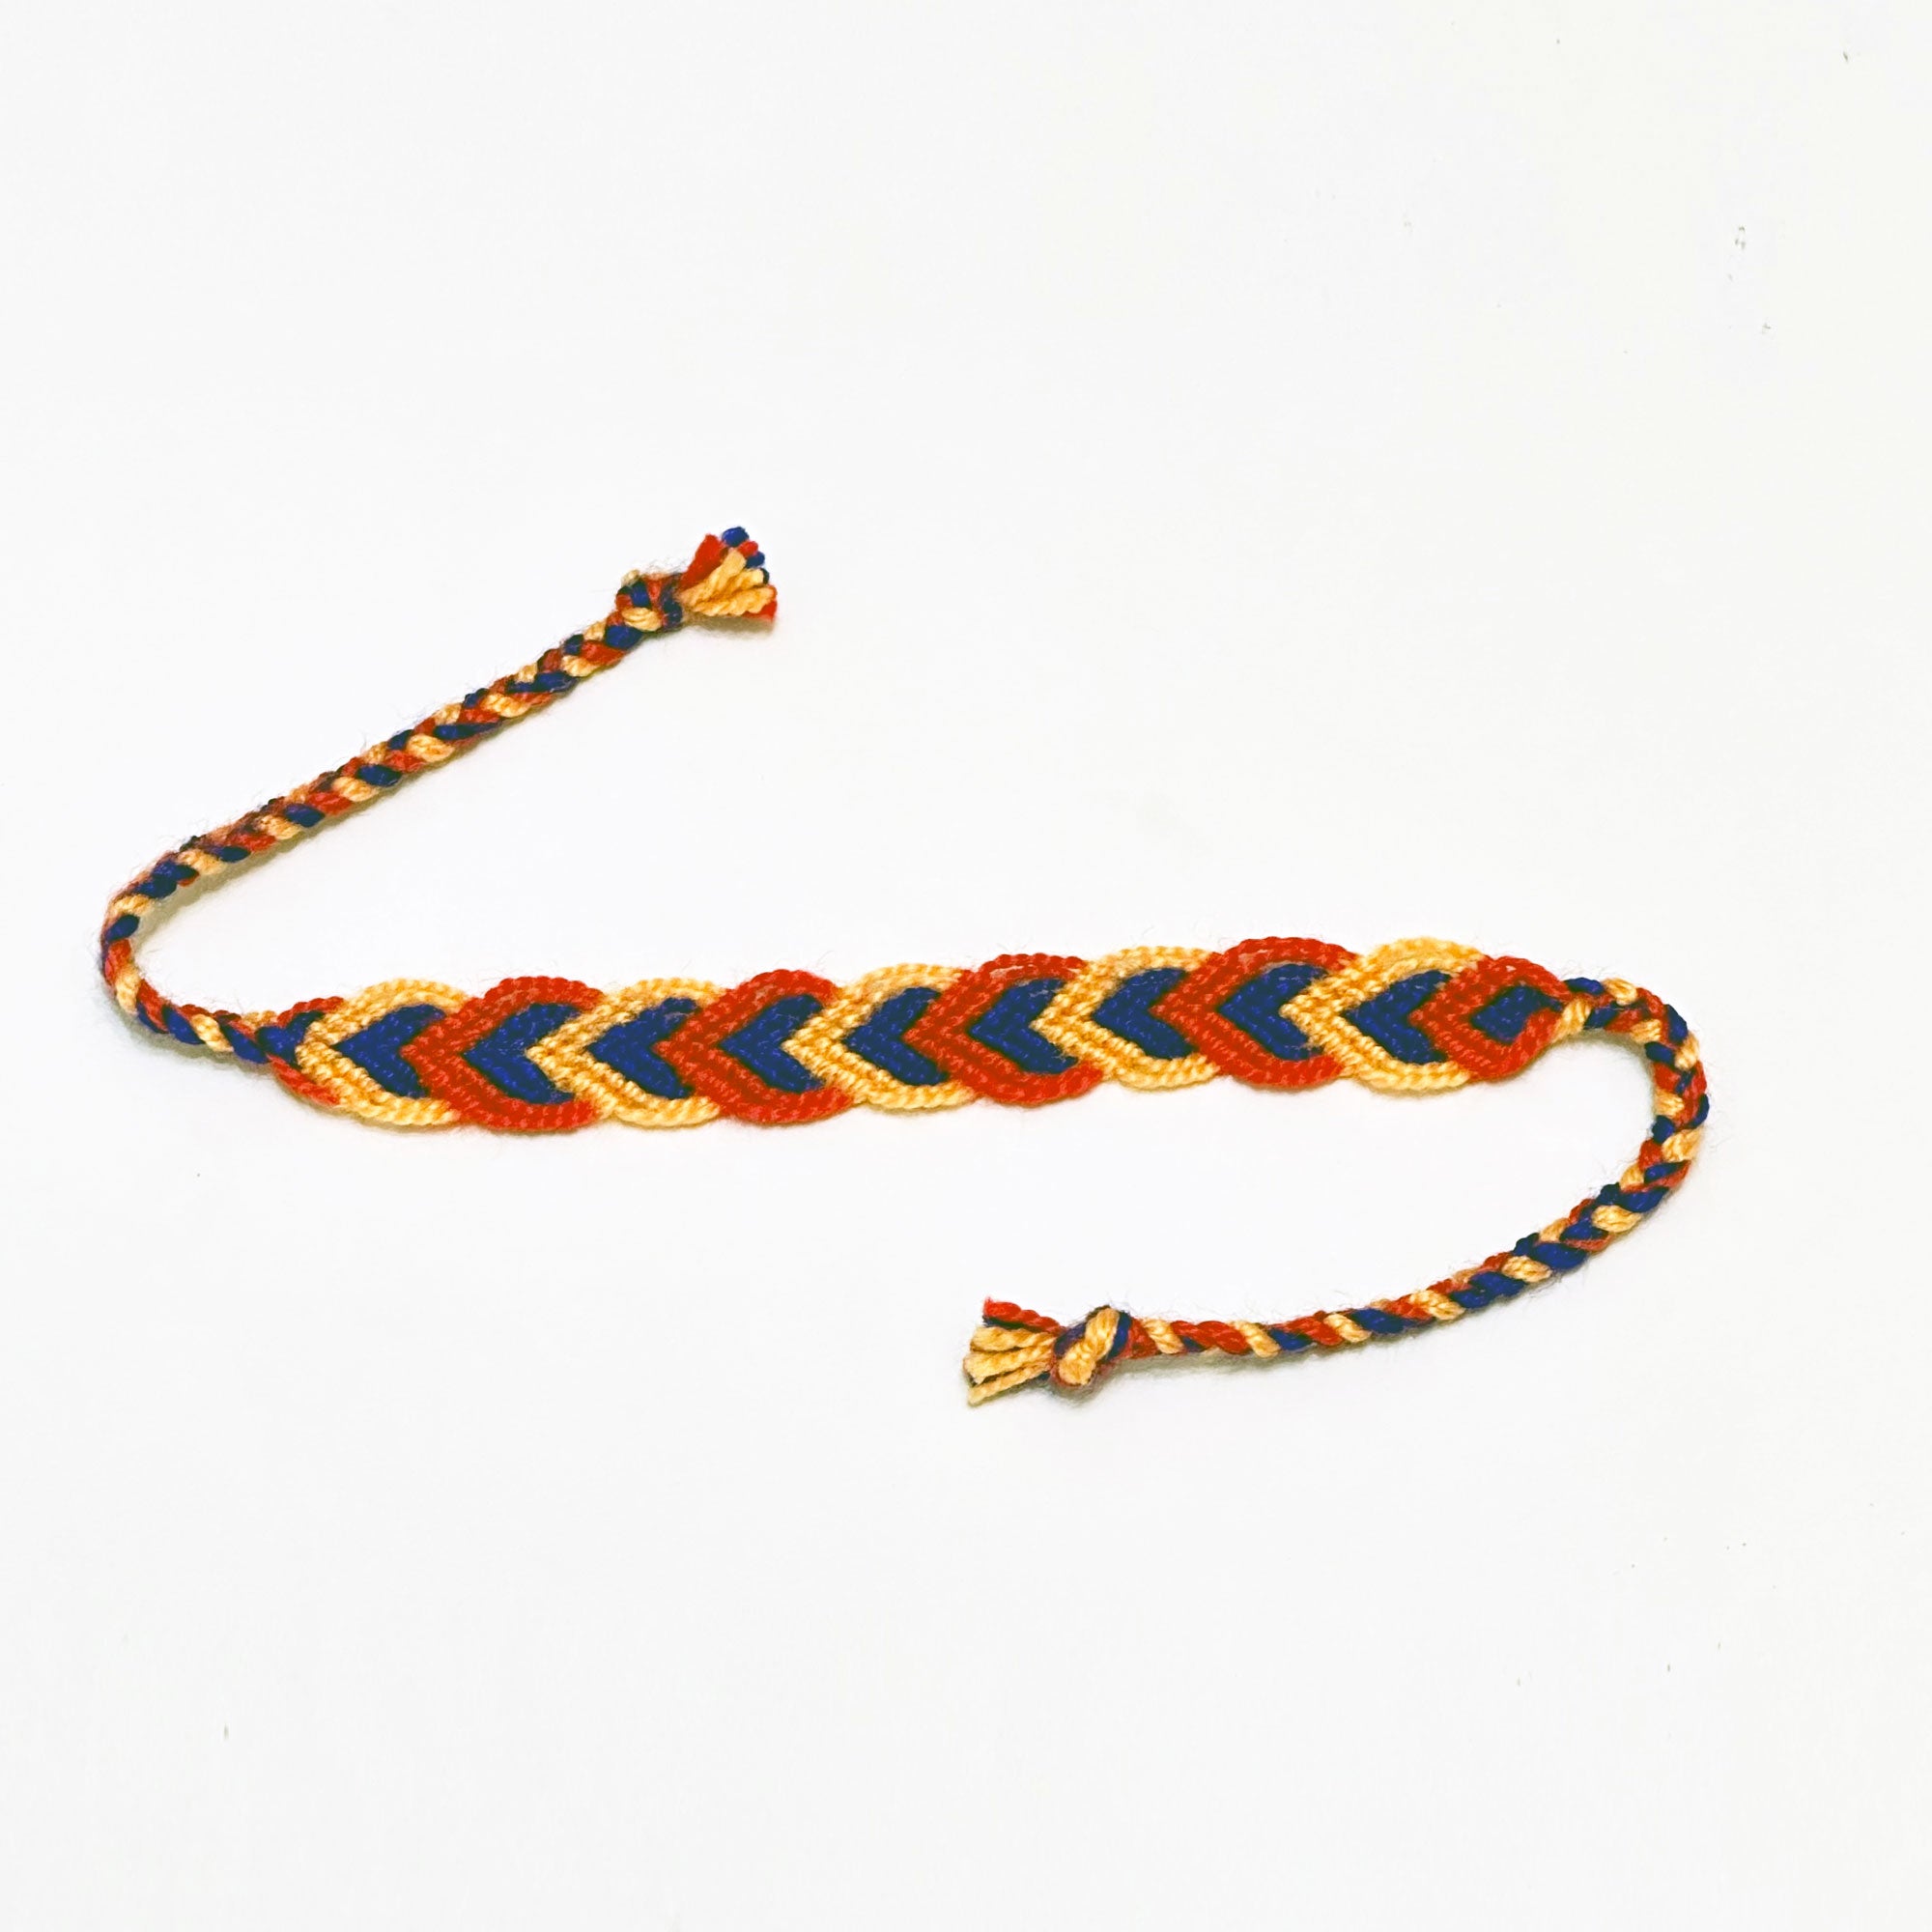 Handmade Friendship Bracelet - Armenian Flag Colors